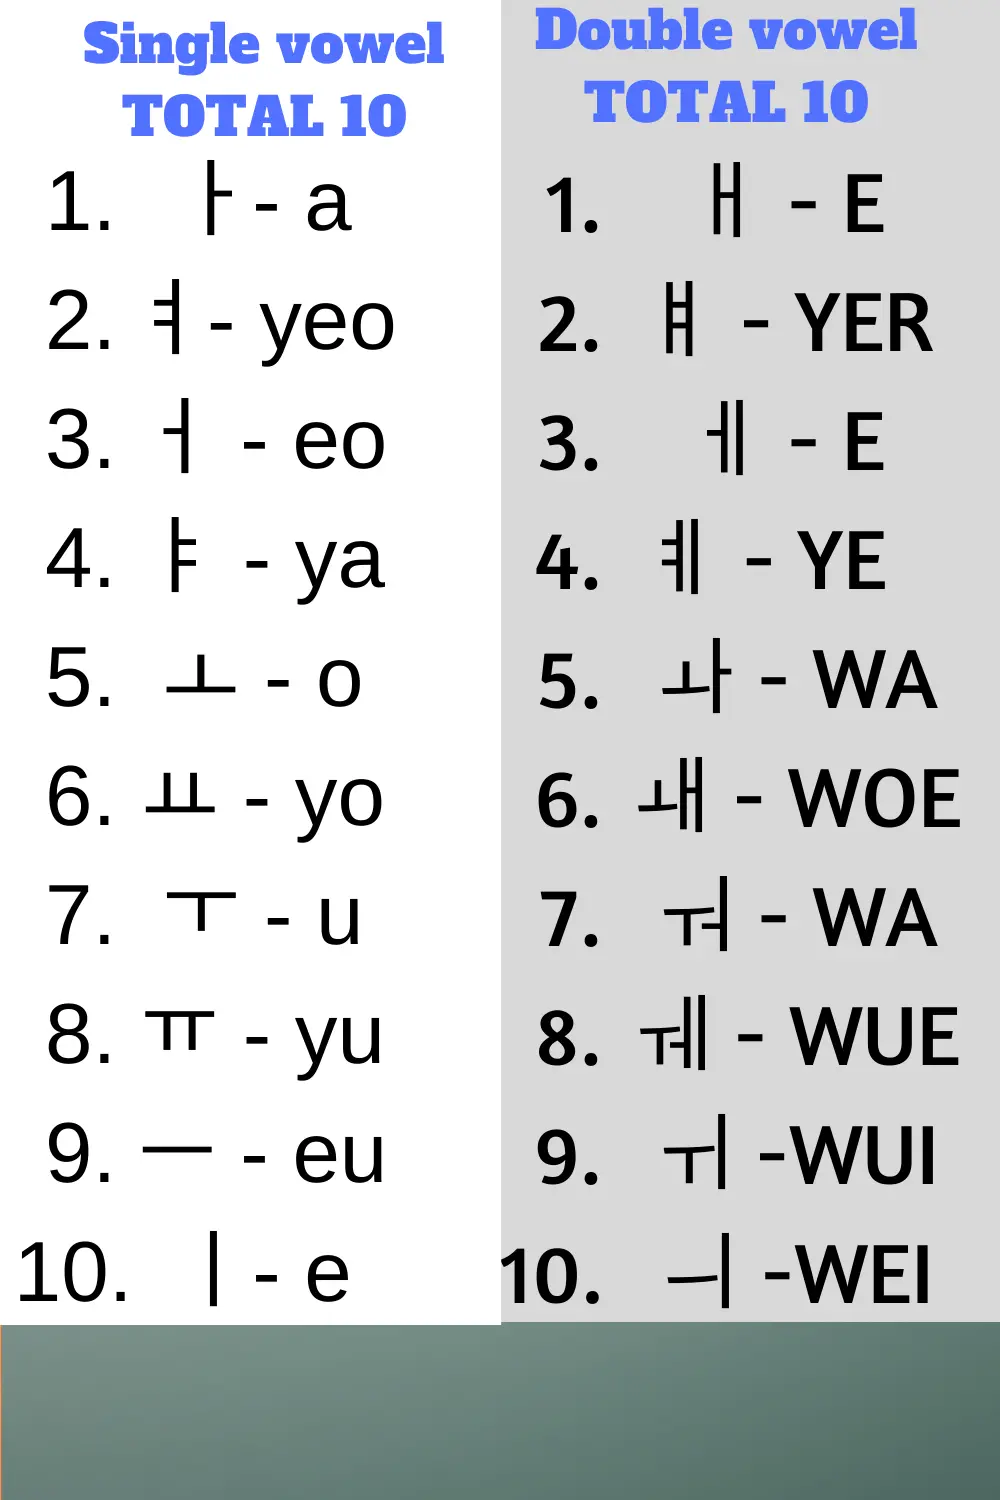 Korean alphabet chart with pronunciation - korean- vowels